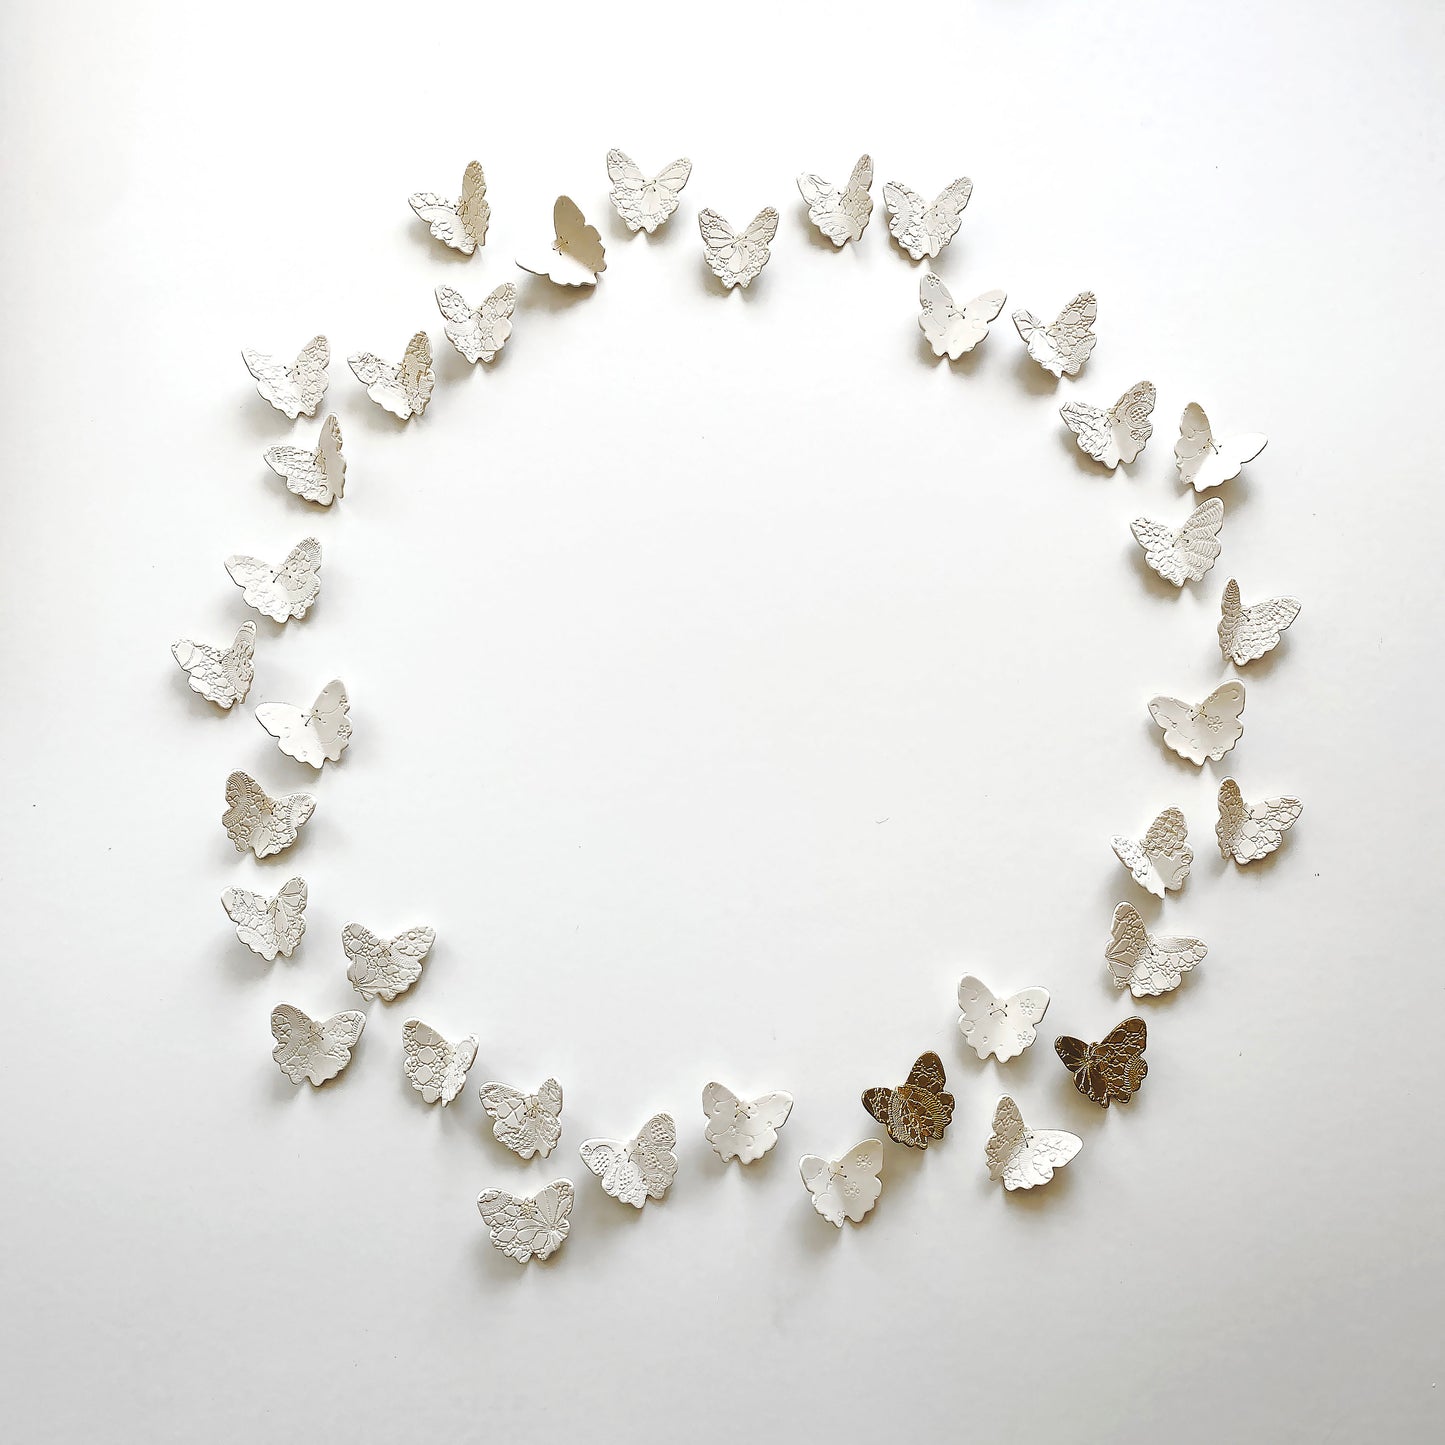 CUSTOM ARTWORK Multi Listing - 3D Butterfly wall art White porcelain handmade ceramic gold finish brass wire butterflies Original art